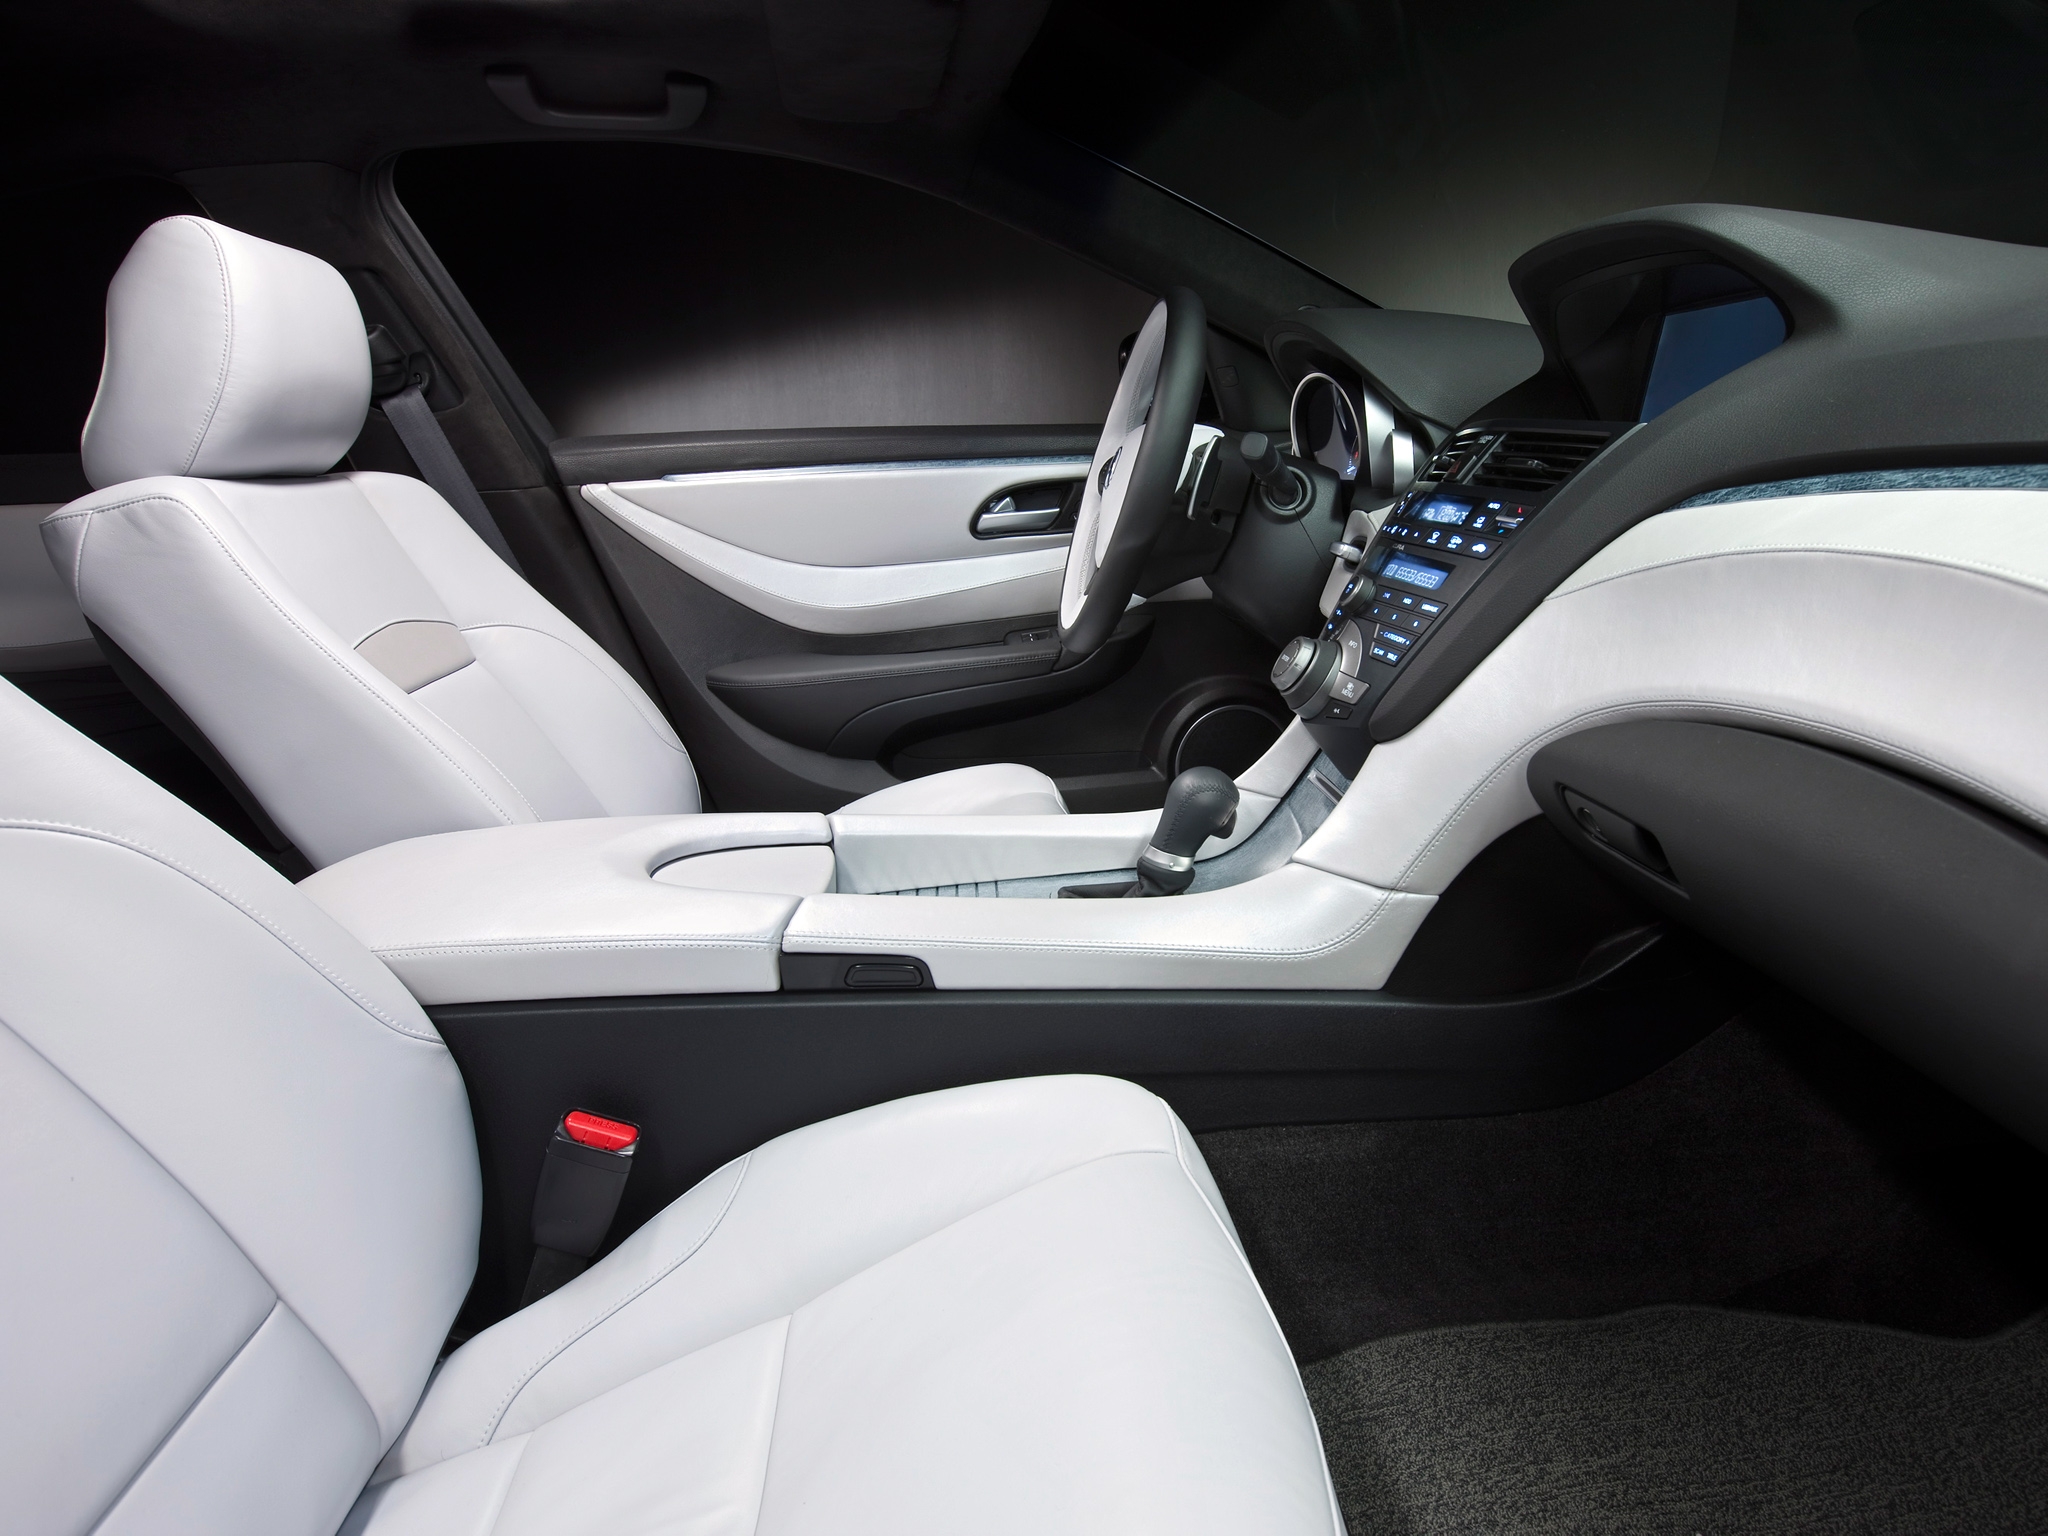 salon, acura, interior, cars, steering wheel, rudder, zdx, 2009, concept car 8K